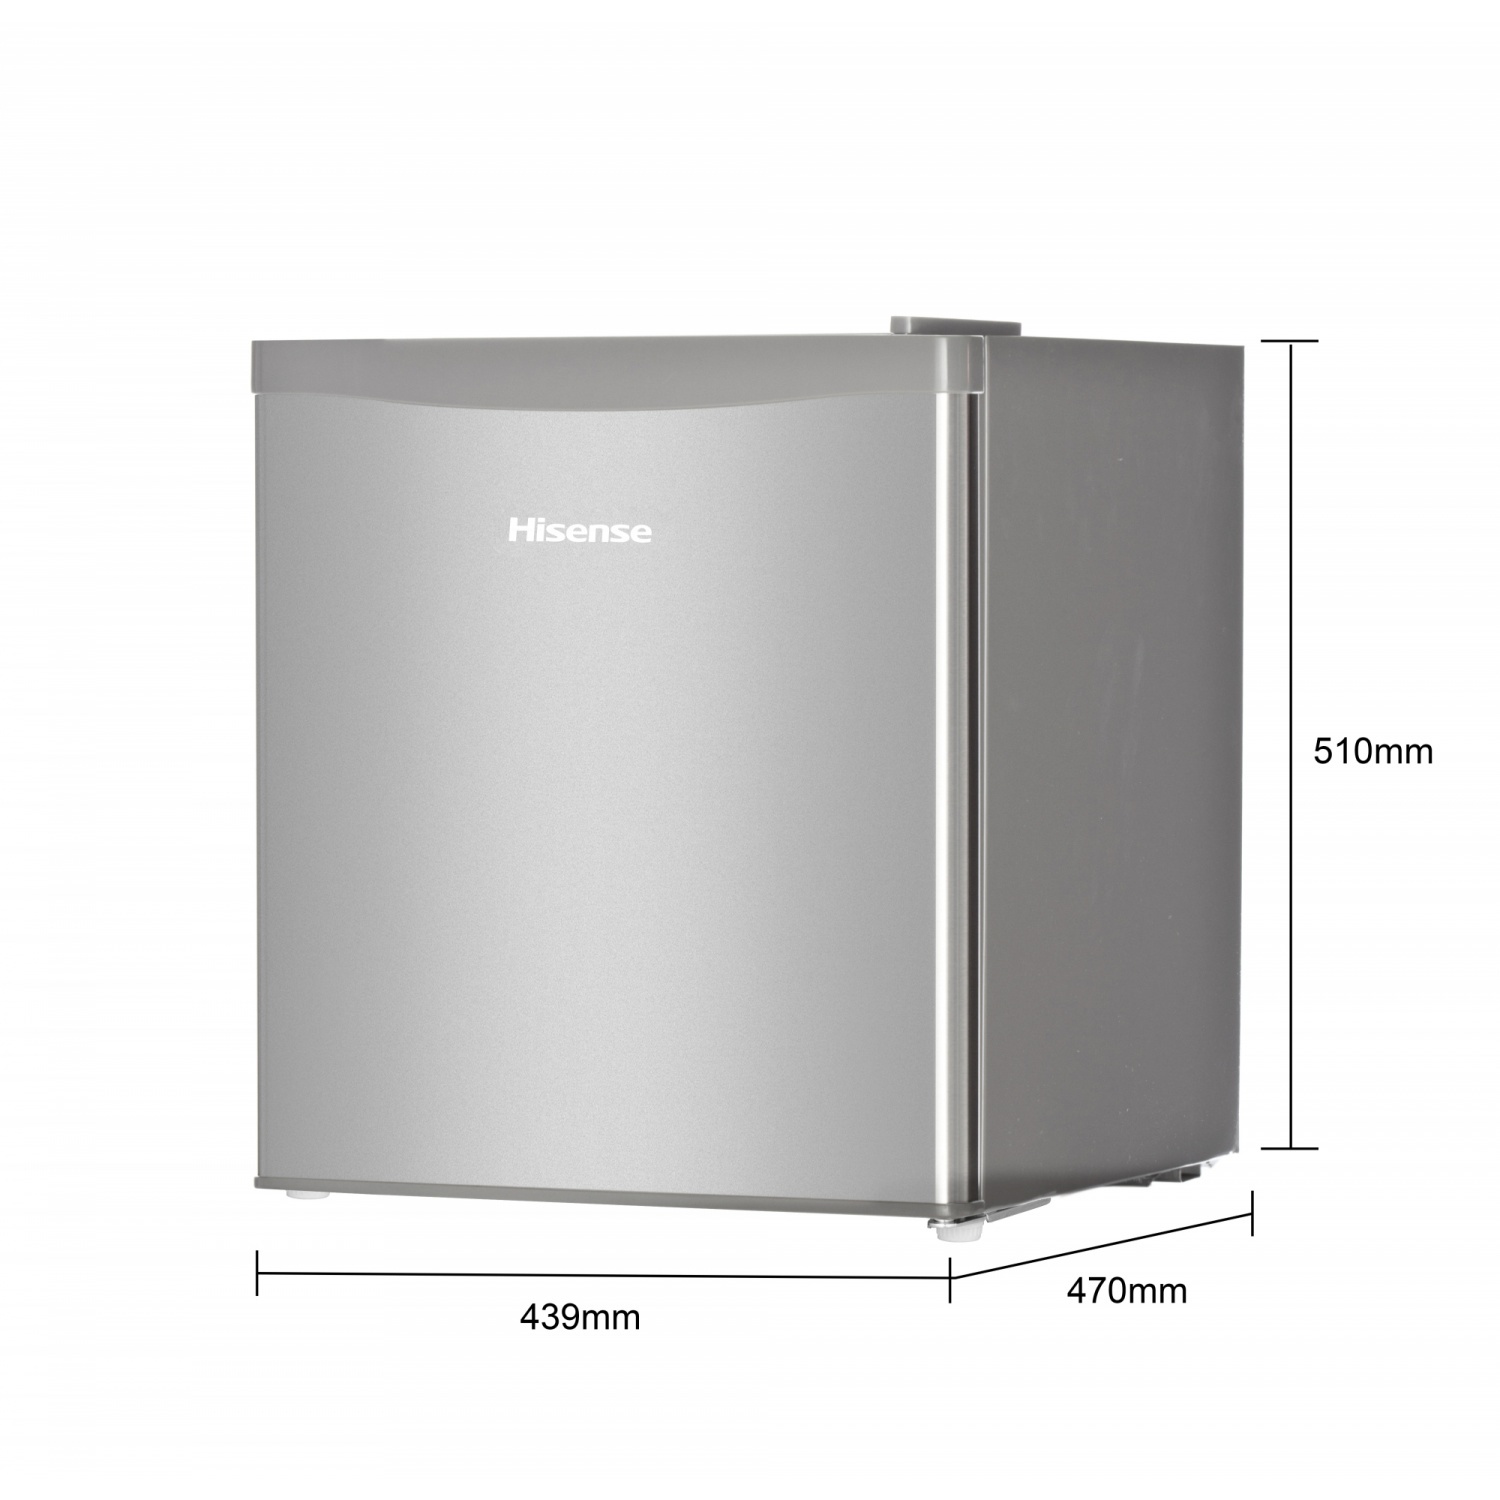 HISENSE ตู้เย็น Minibar 1 ประตู  1.6 คิว RR61D4TGN สีเงิน